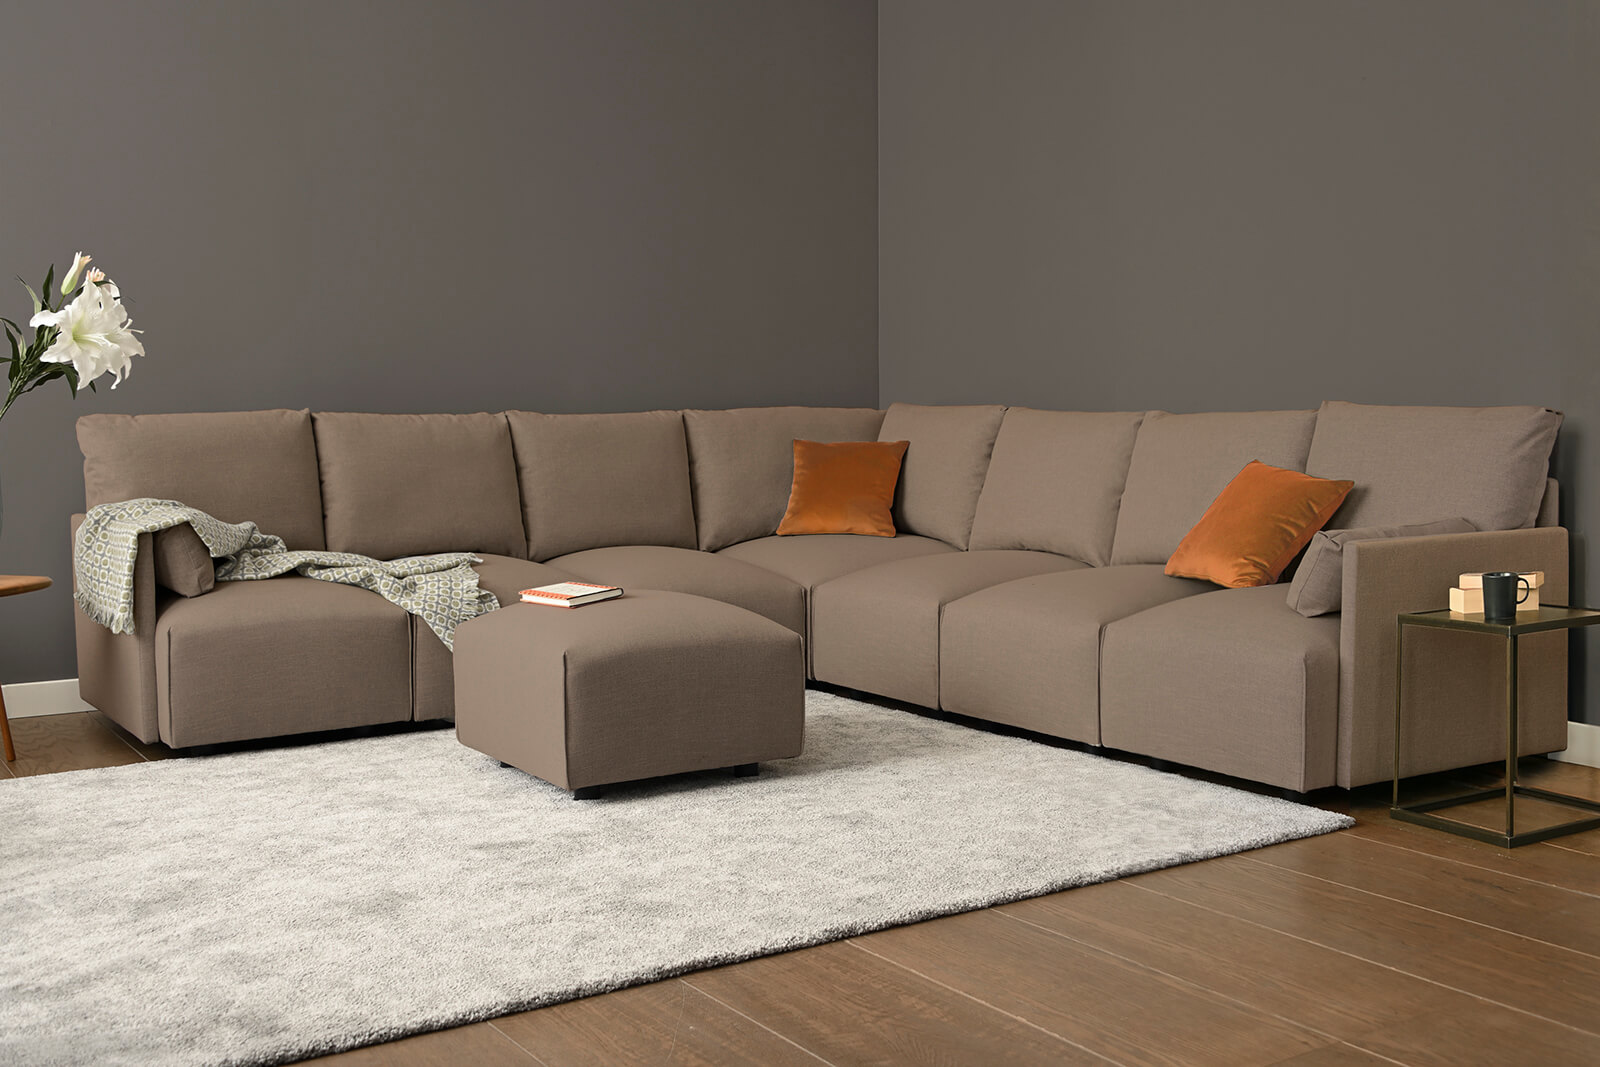 HB04-large-corner-sofa-footstool-3q-husk-4x4-lifestyle